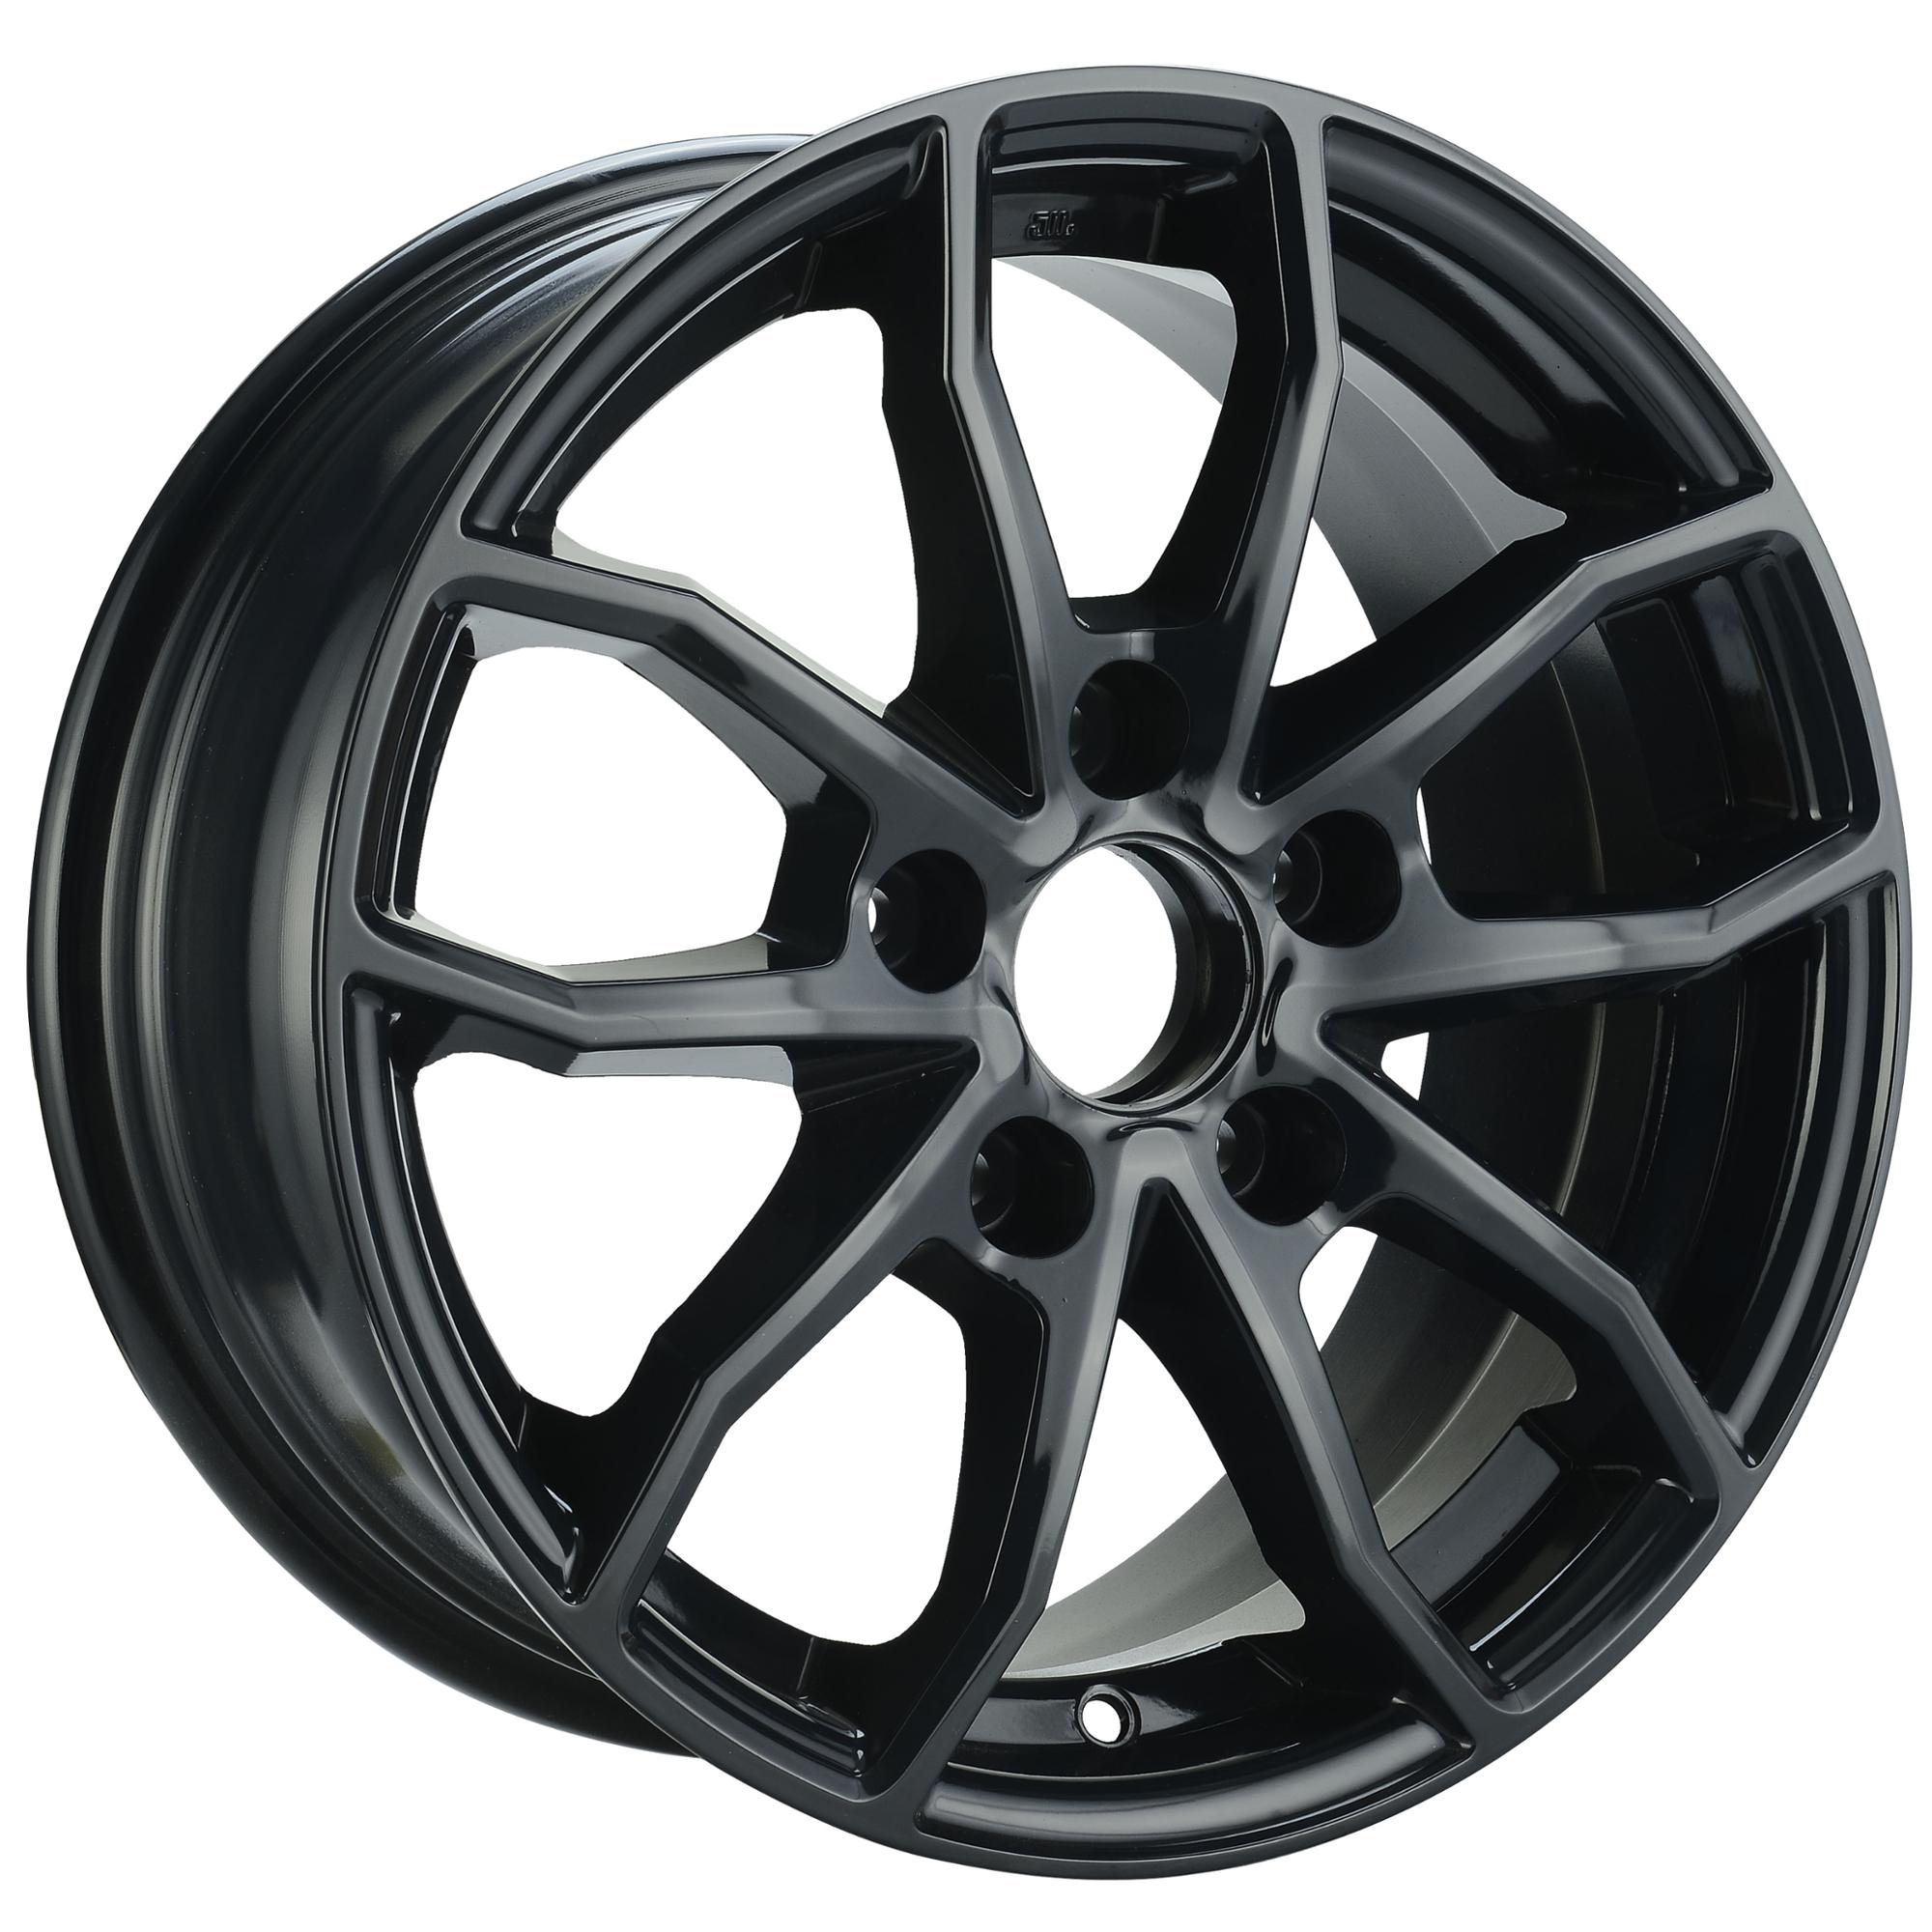 Hot selling 15x6jj car wheel rim